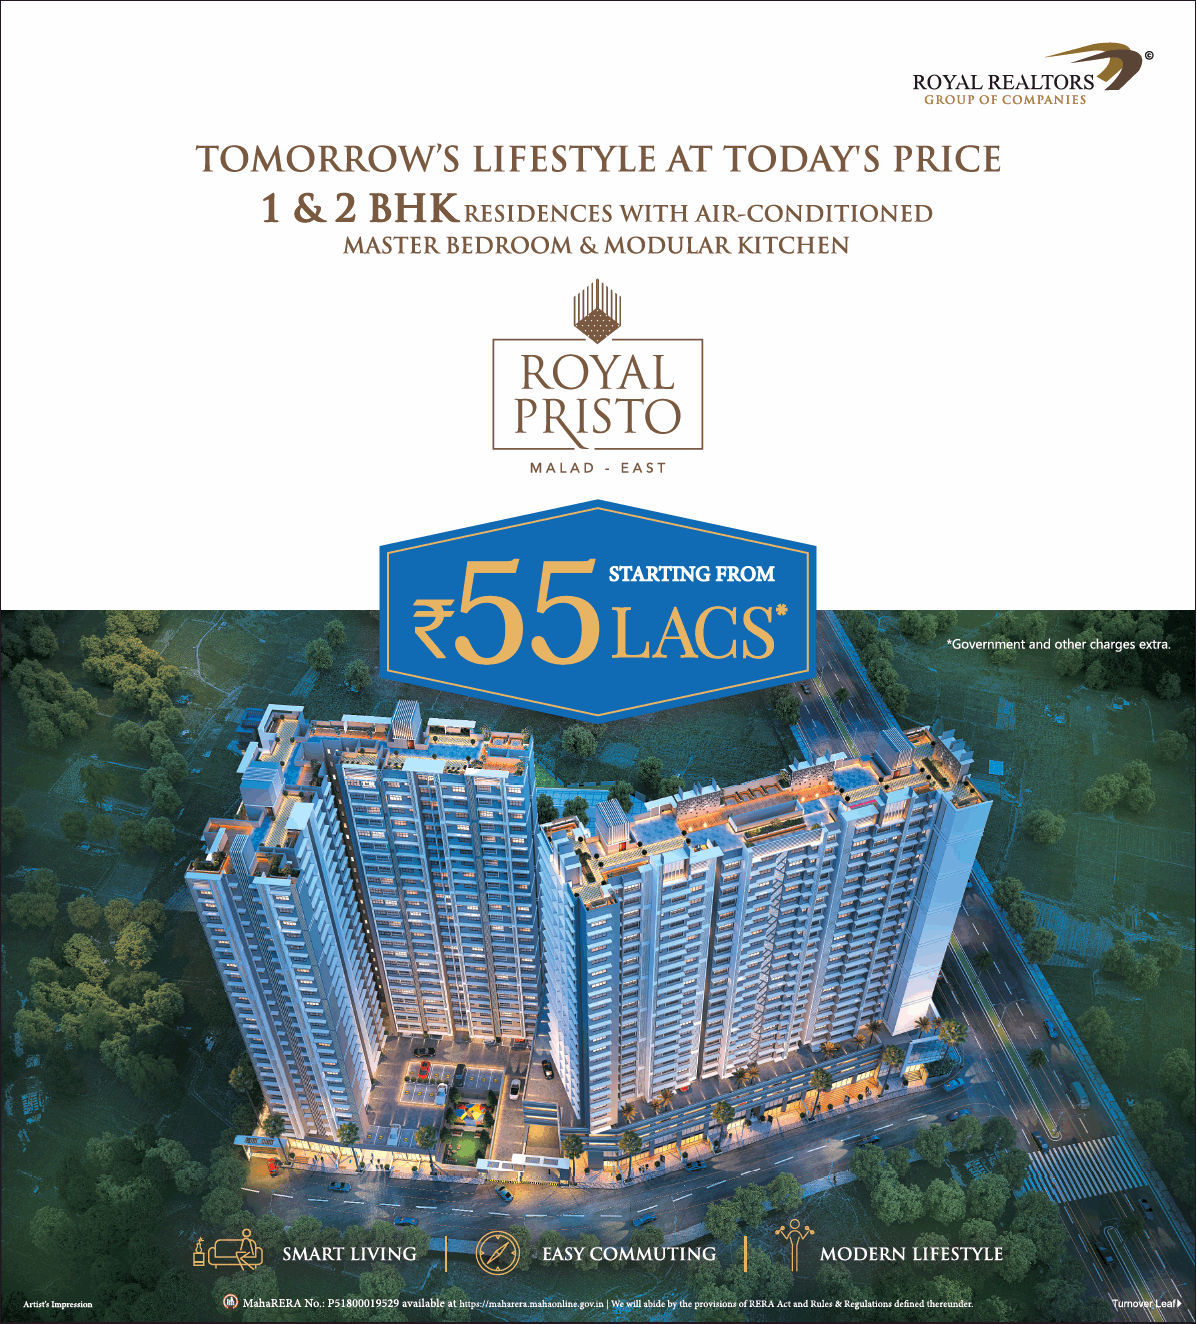 Introducing tomorrows lifestyle at today's price at Royal Pristo in Mumbai